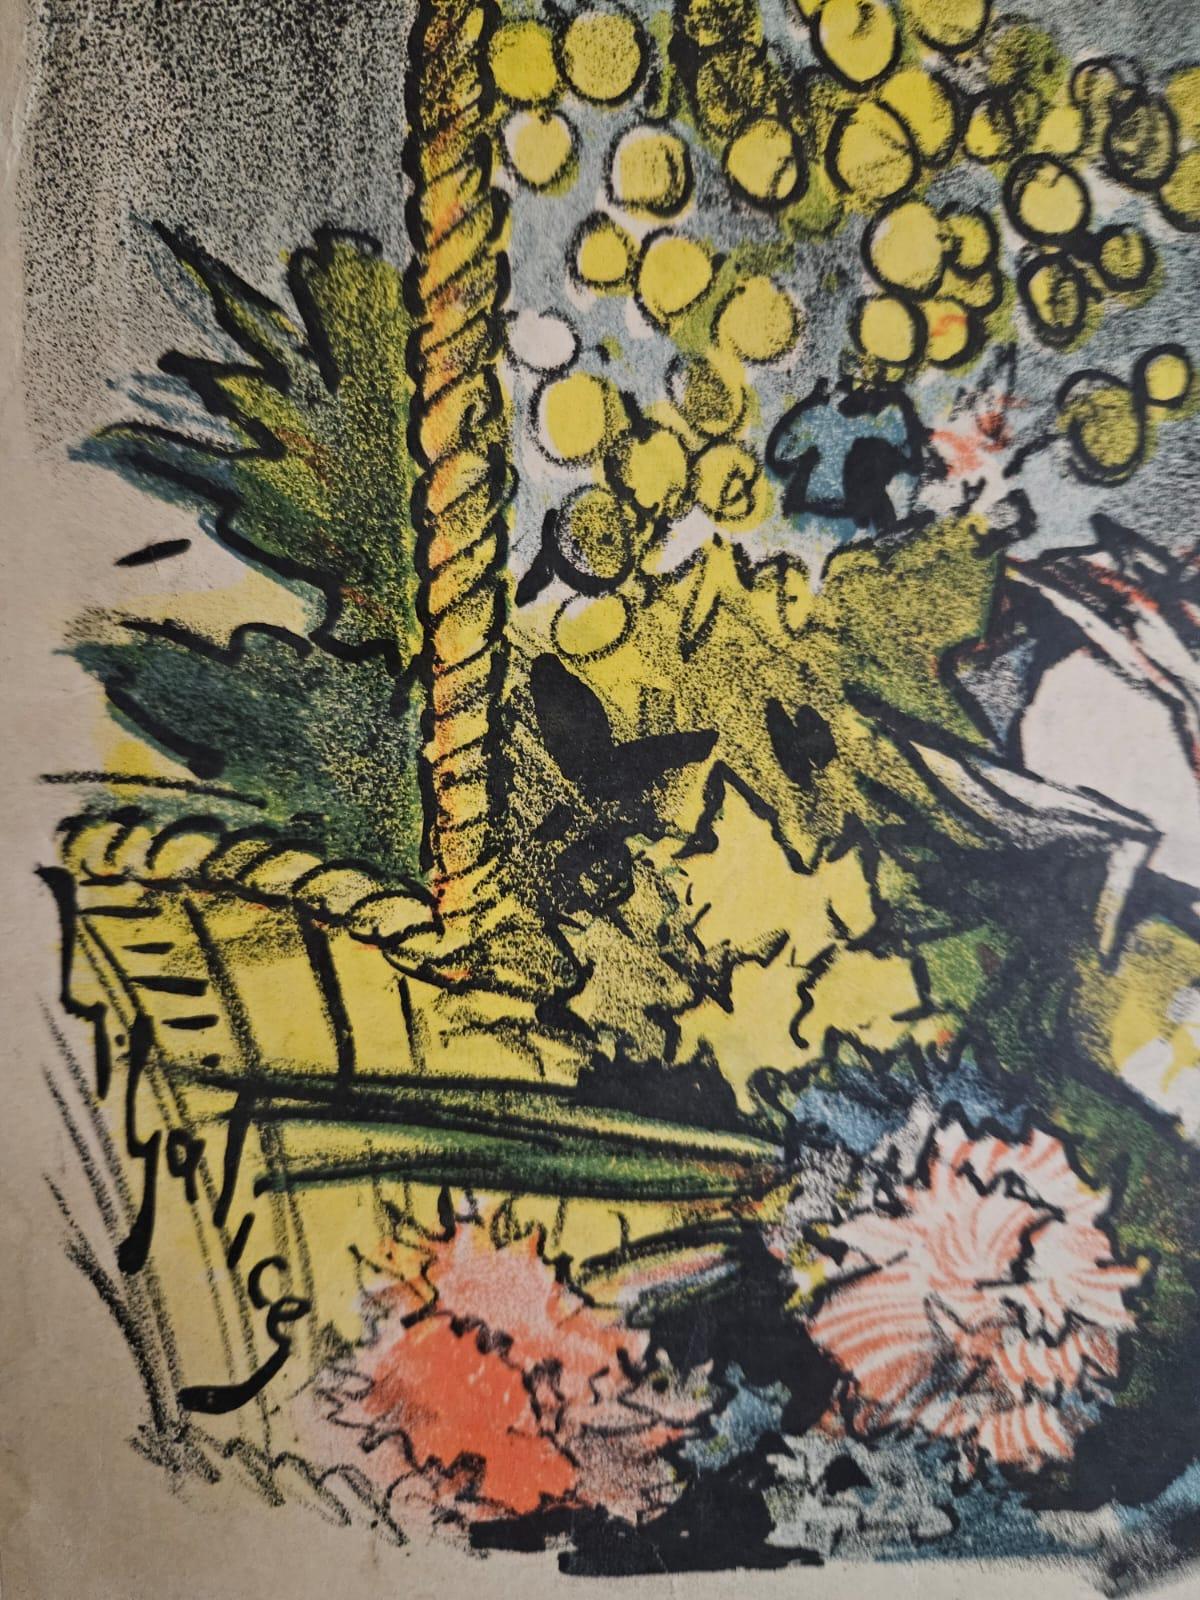 1893 Original poster by Louis Galice for the Bois de Boulogne flower festival For Sale 1